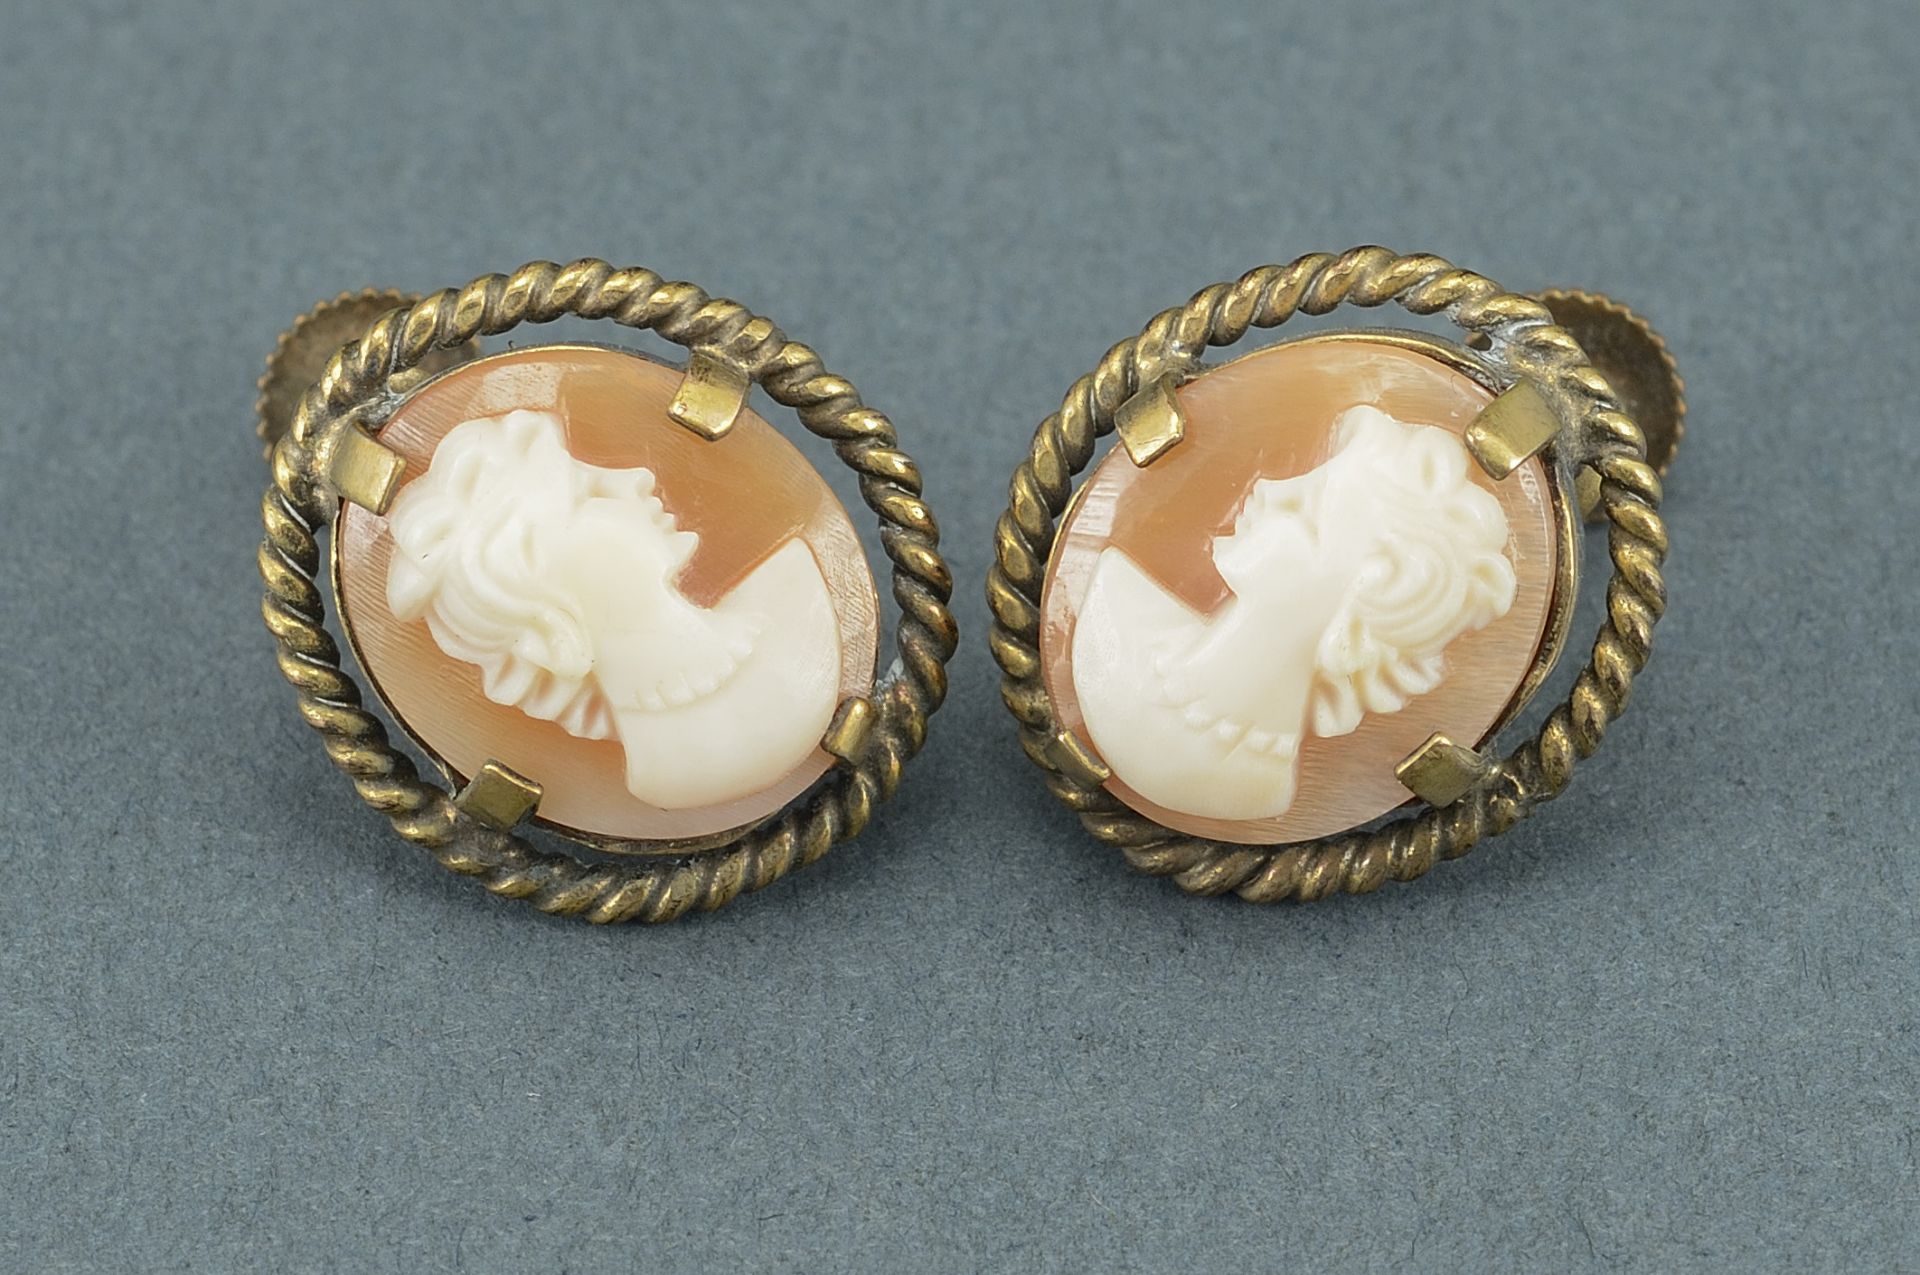 Shell cameo gold earrings